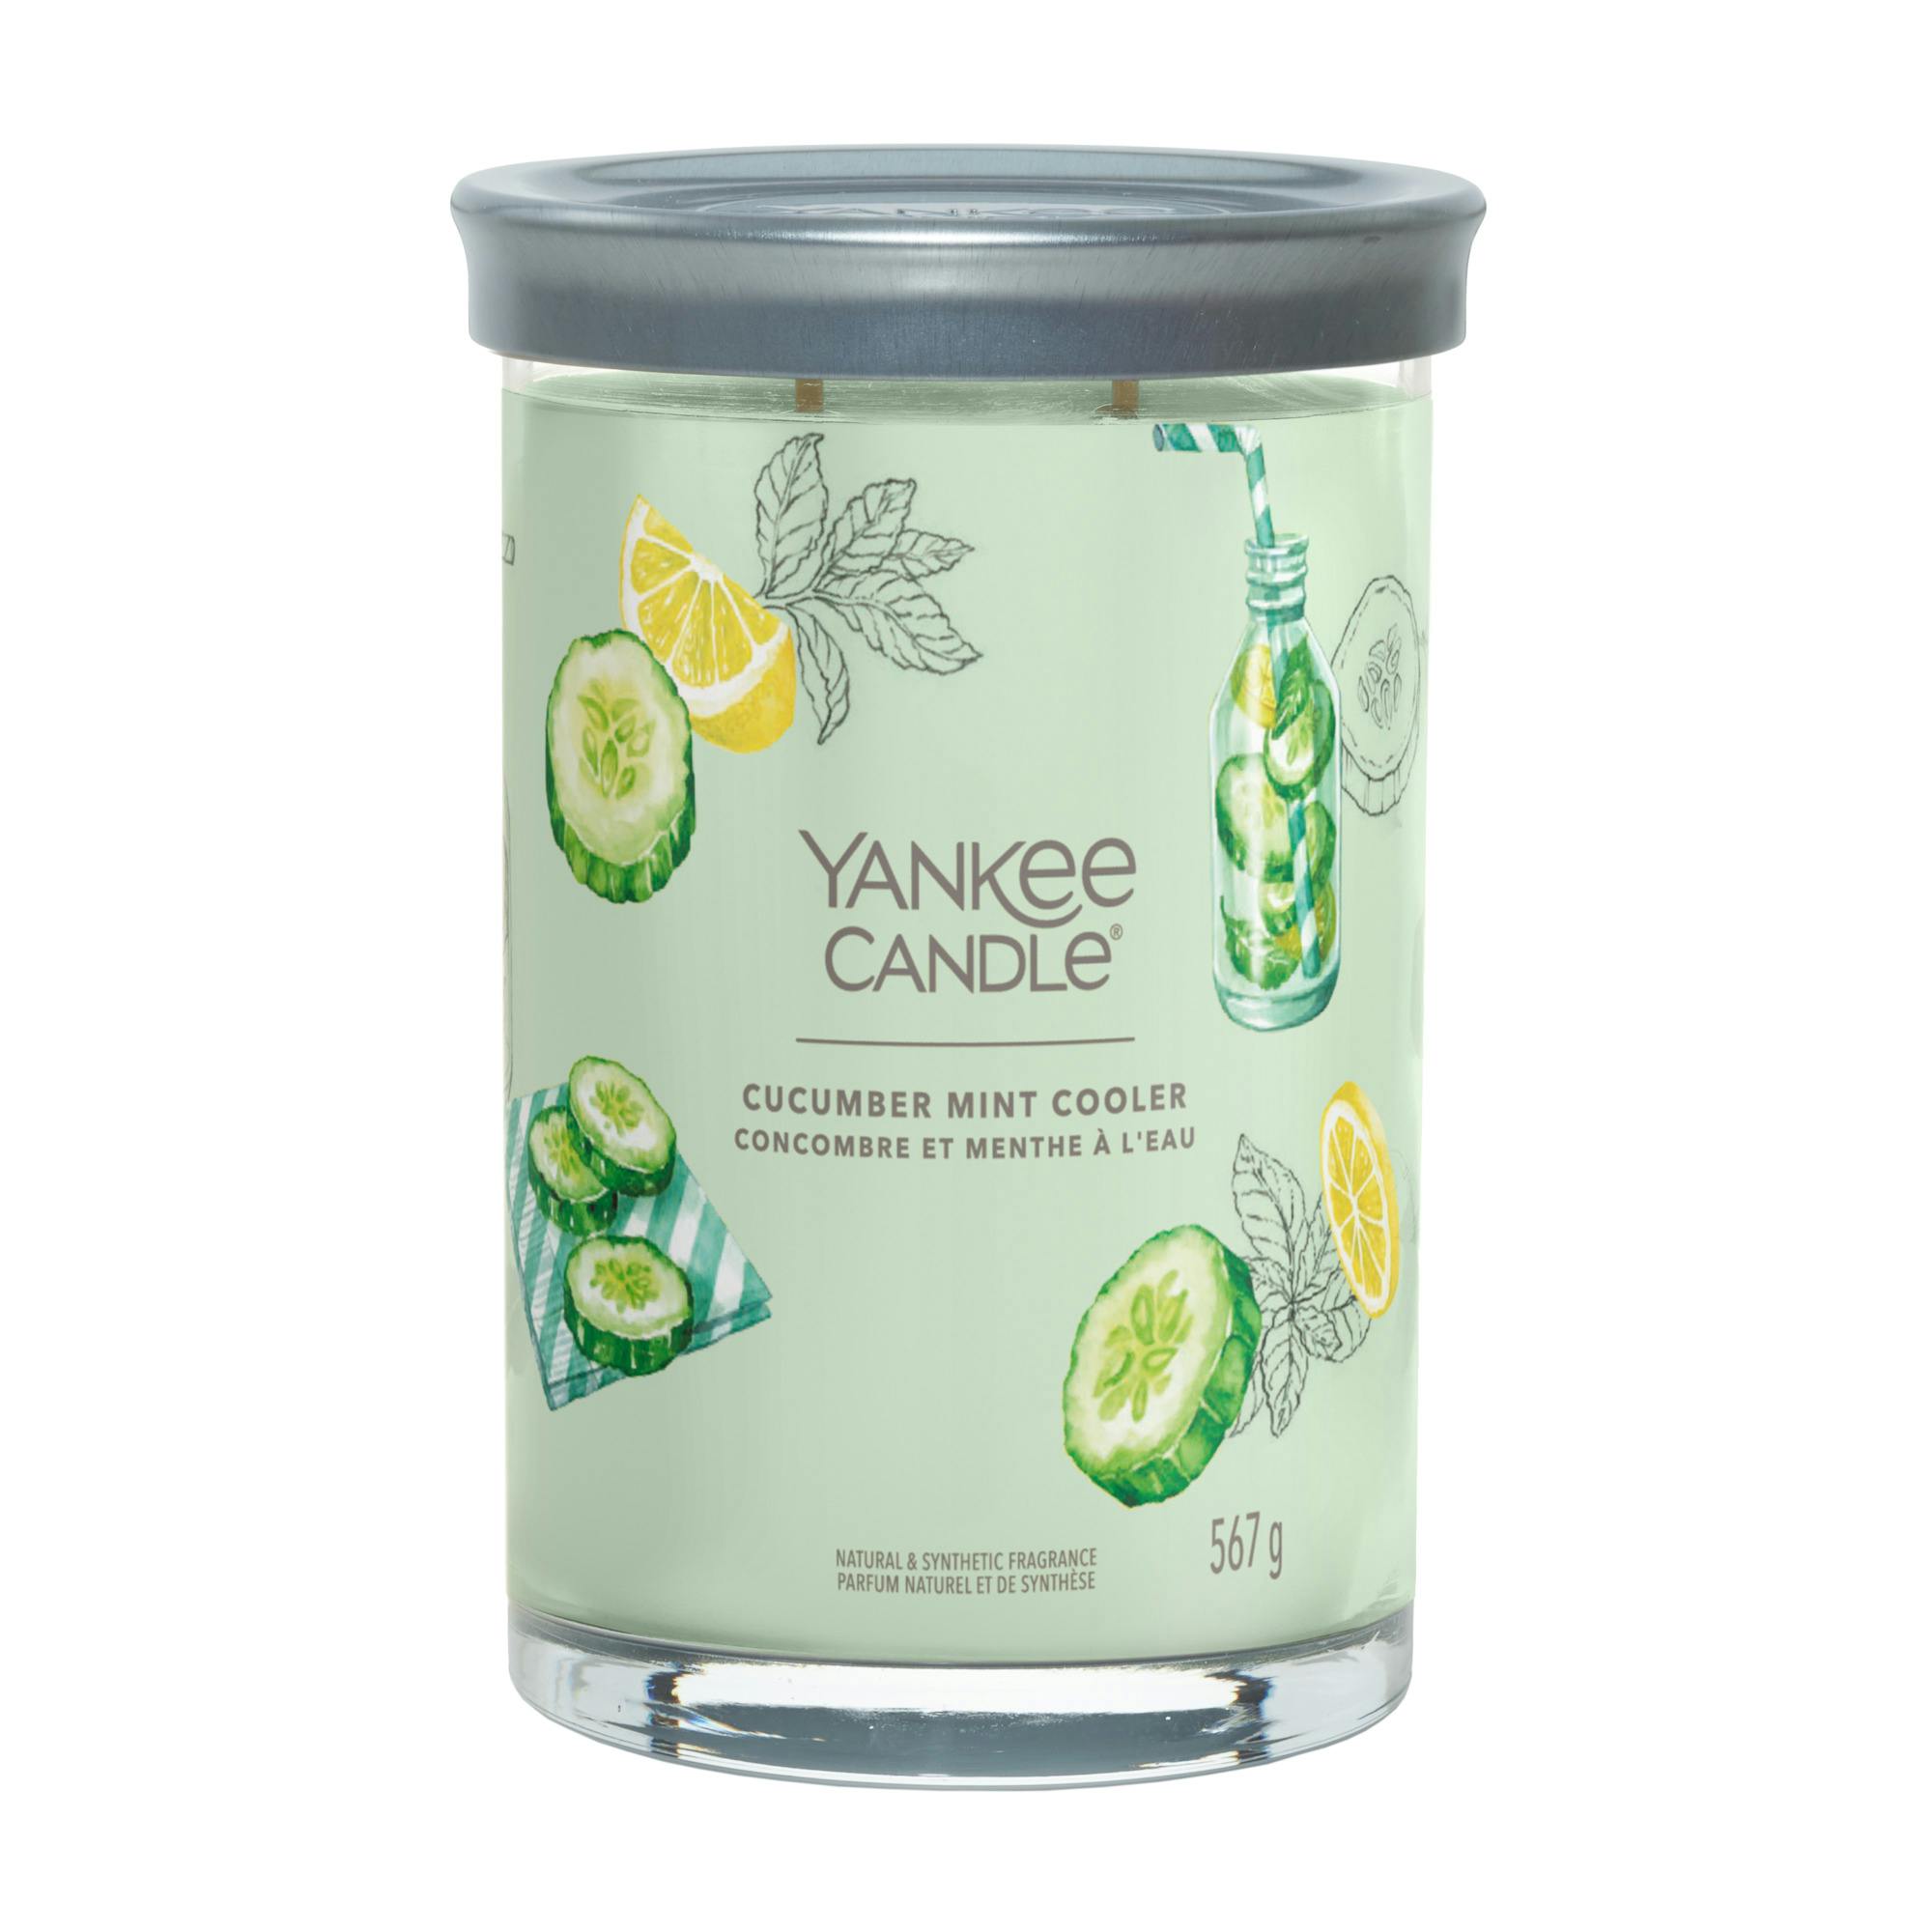 Yankee Candle Cucumber Mint Cooler Signature Large Tumbler Duftkerze